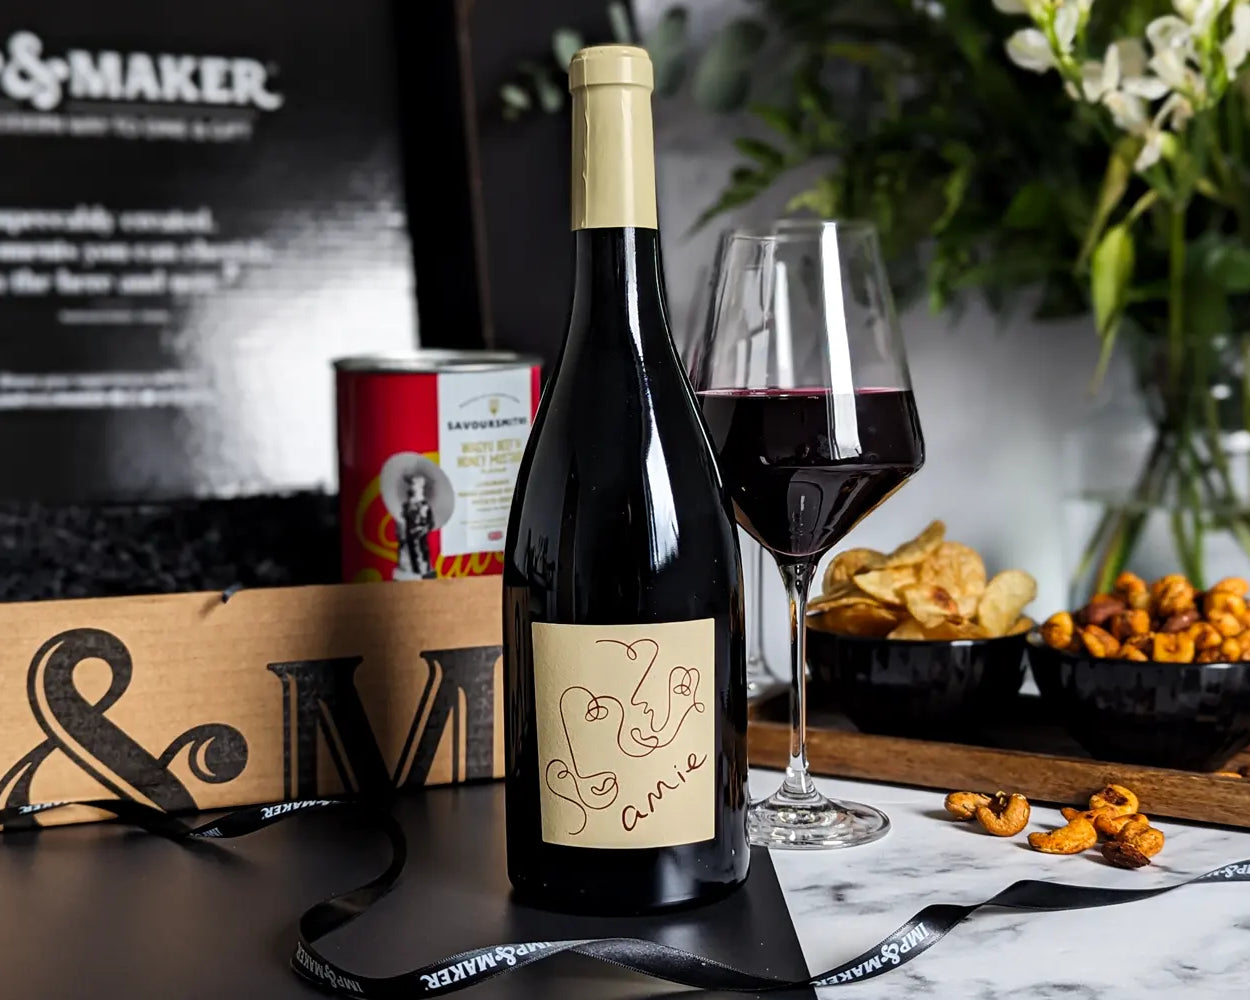 Vegan Wine & Treat Box - IMP & MAKER